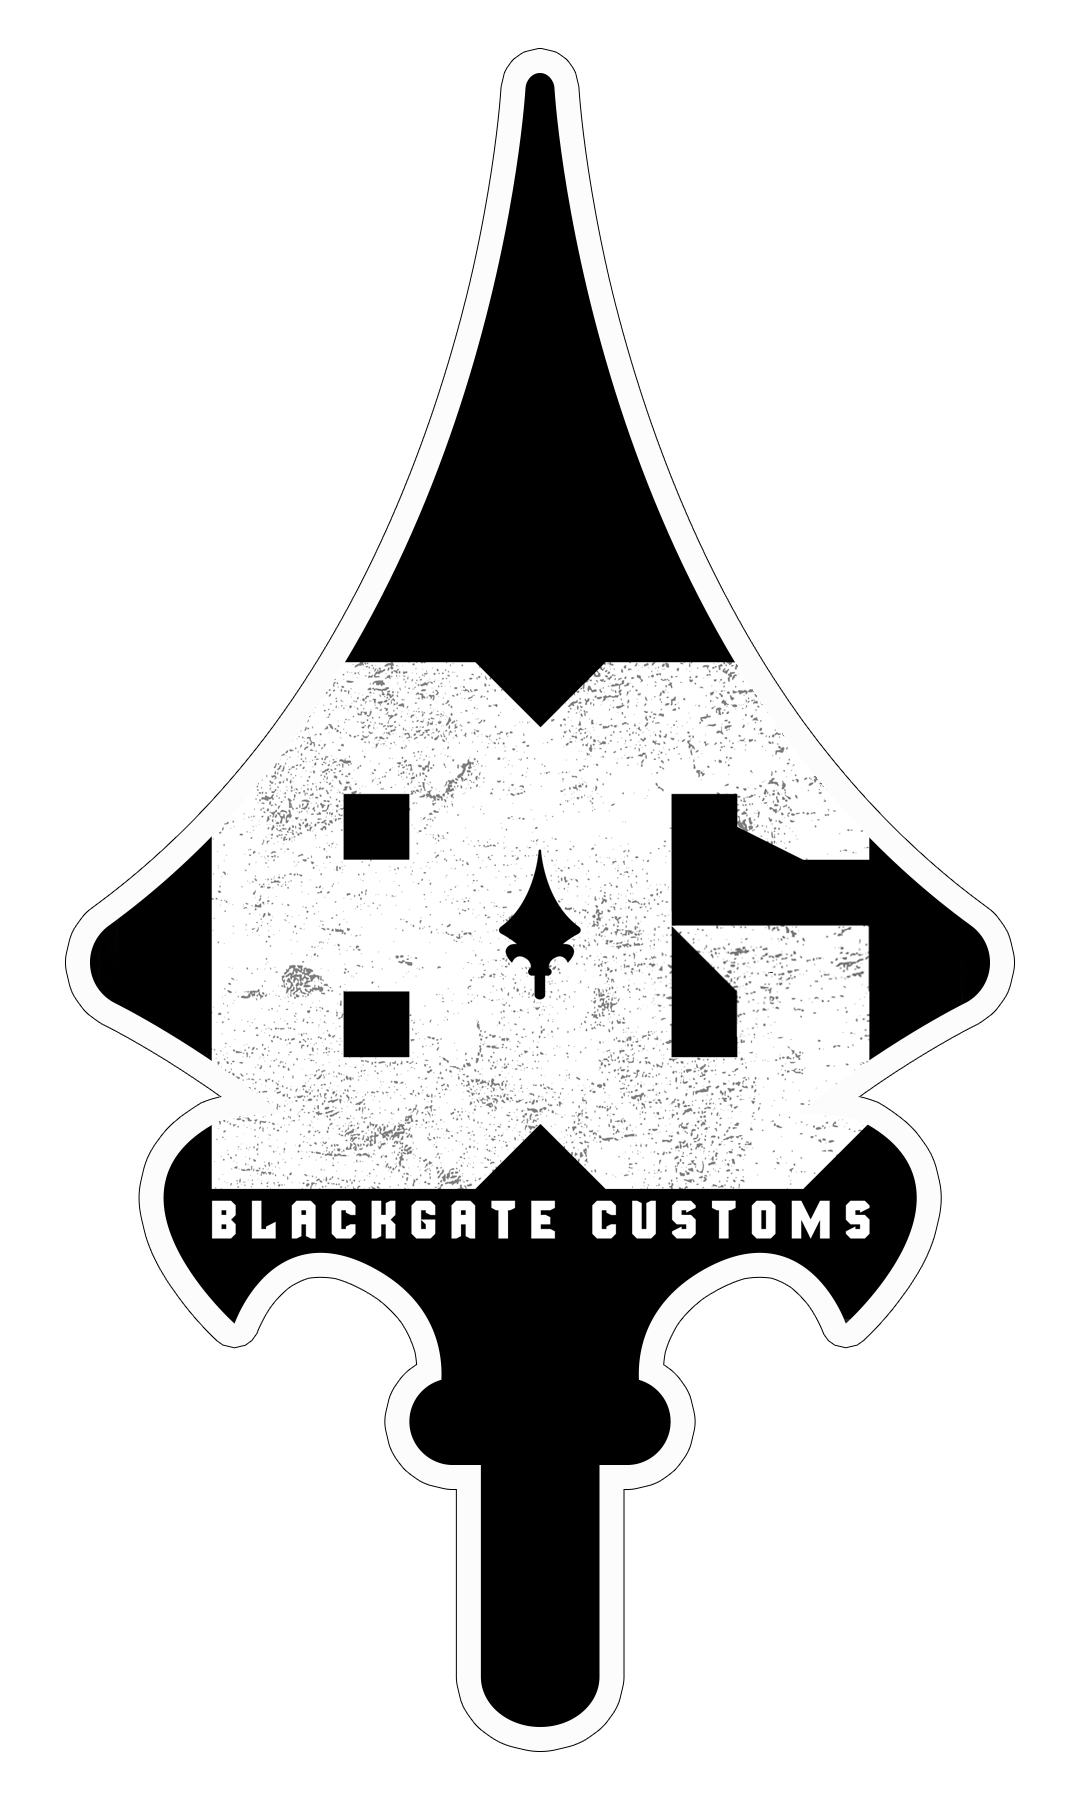 Blackgate Customs